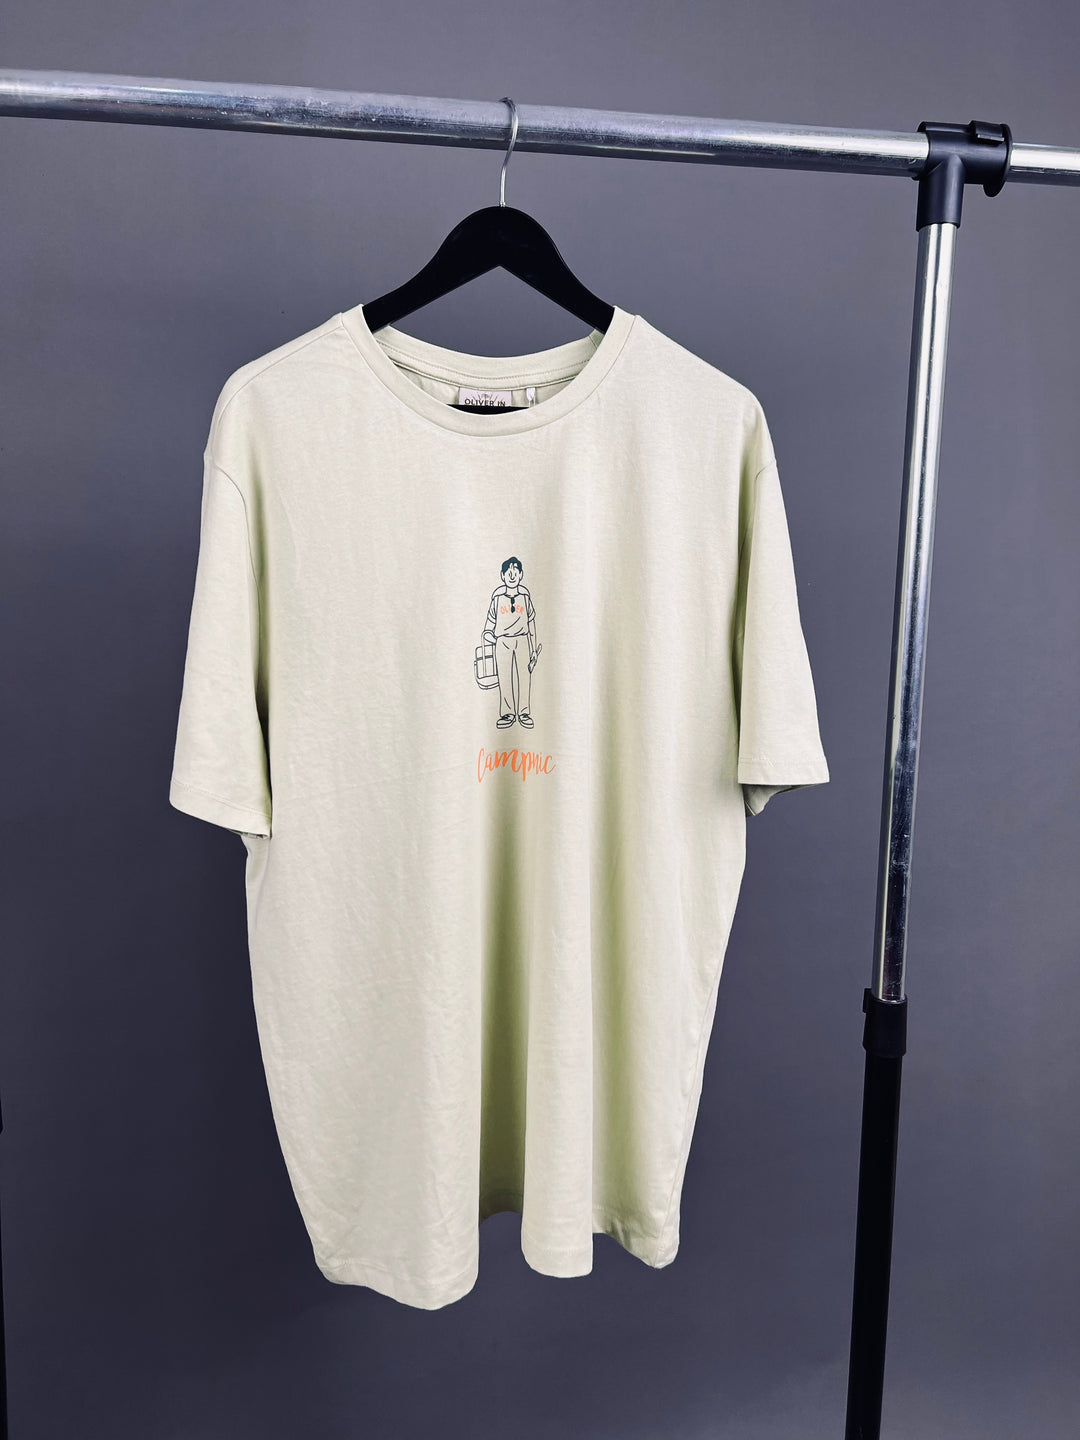 Campnic print T-shirt in mint